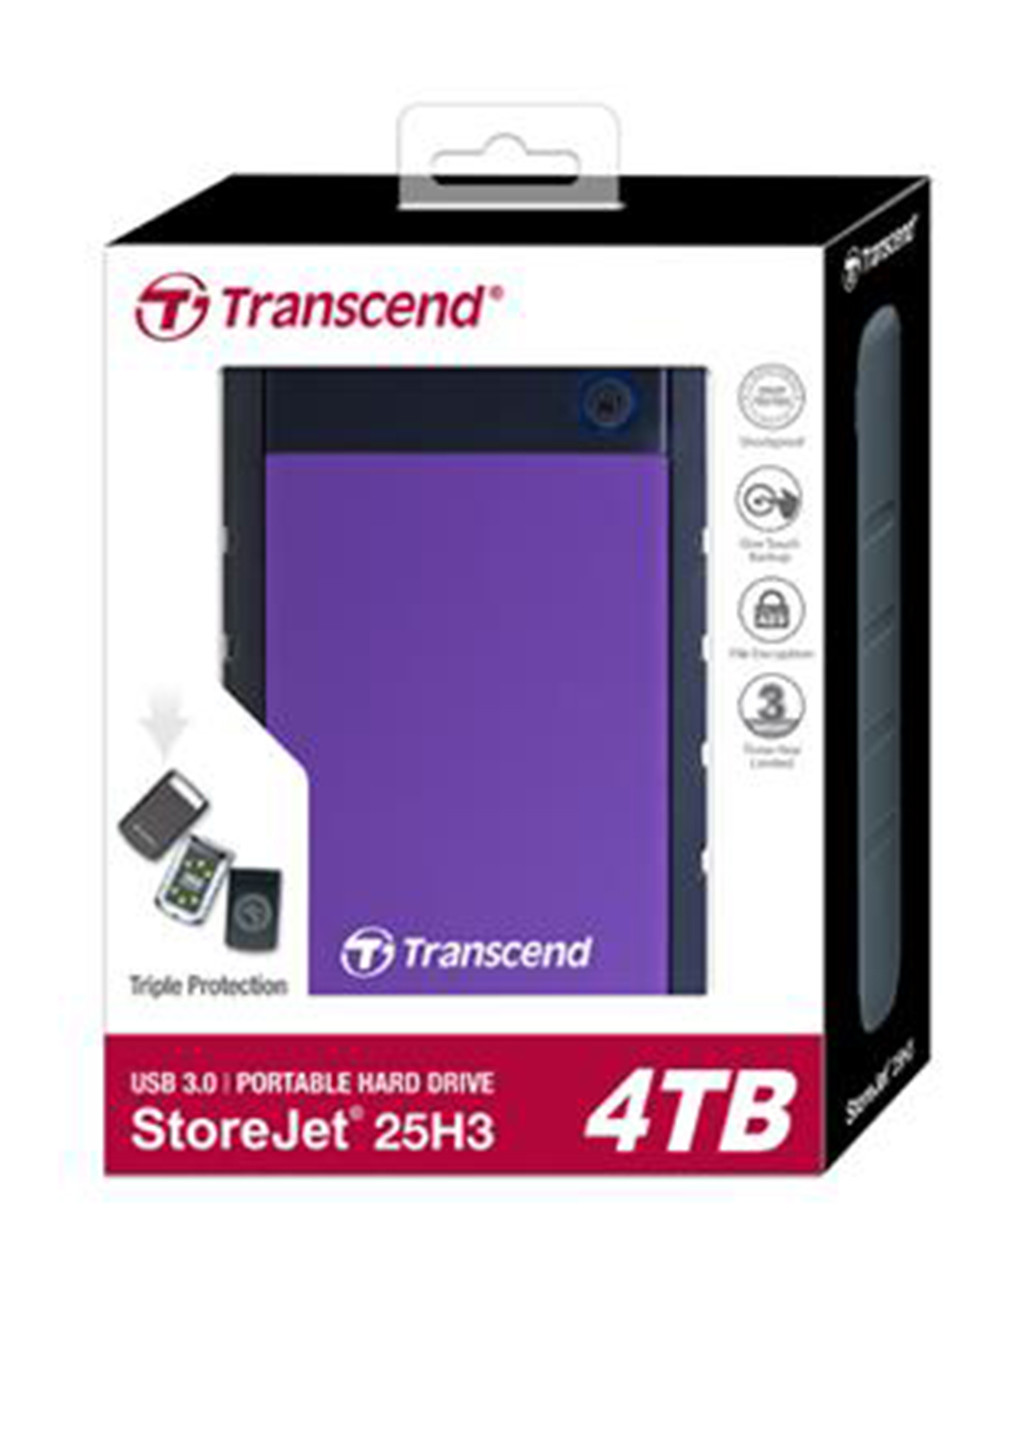 Внешний жесткий диск StoreJet 25H3P 4TB 5400rpm 8MB TS4TSJ25H3P 2.5 USB 3.0 External Purple Transcend Внешний жесткий диск Transcend StoreJet 25H3P 4TB 5400rpm 8MB TS4TSJ25H3P 2.5 USB 3.0 External Purple фиолетовый